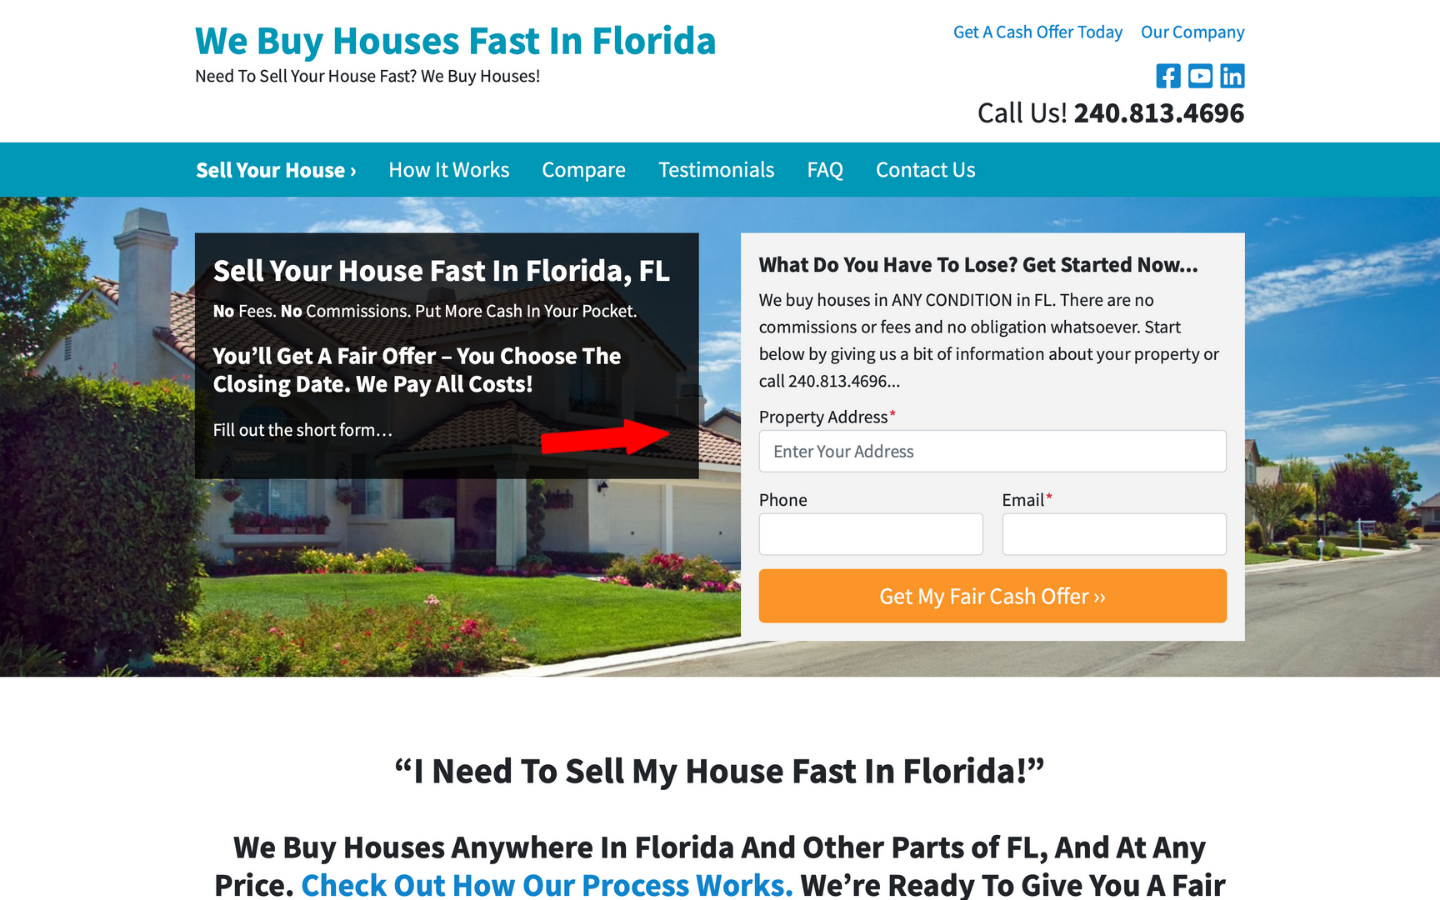 We Buy Houses Fast in Florida